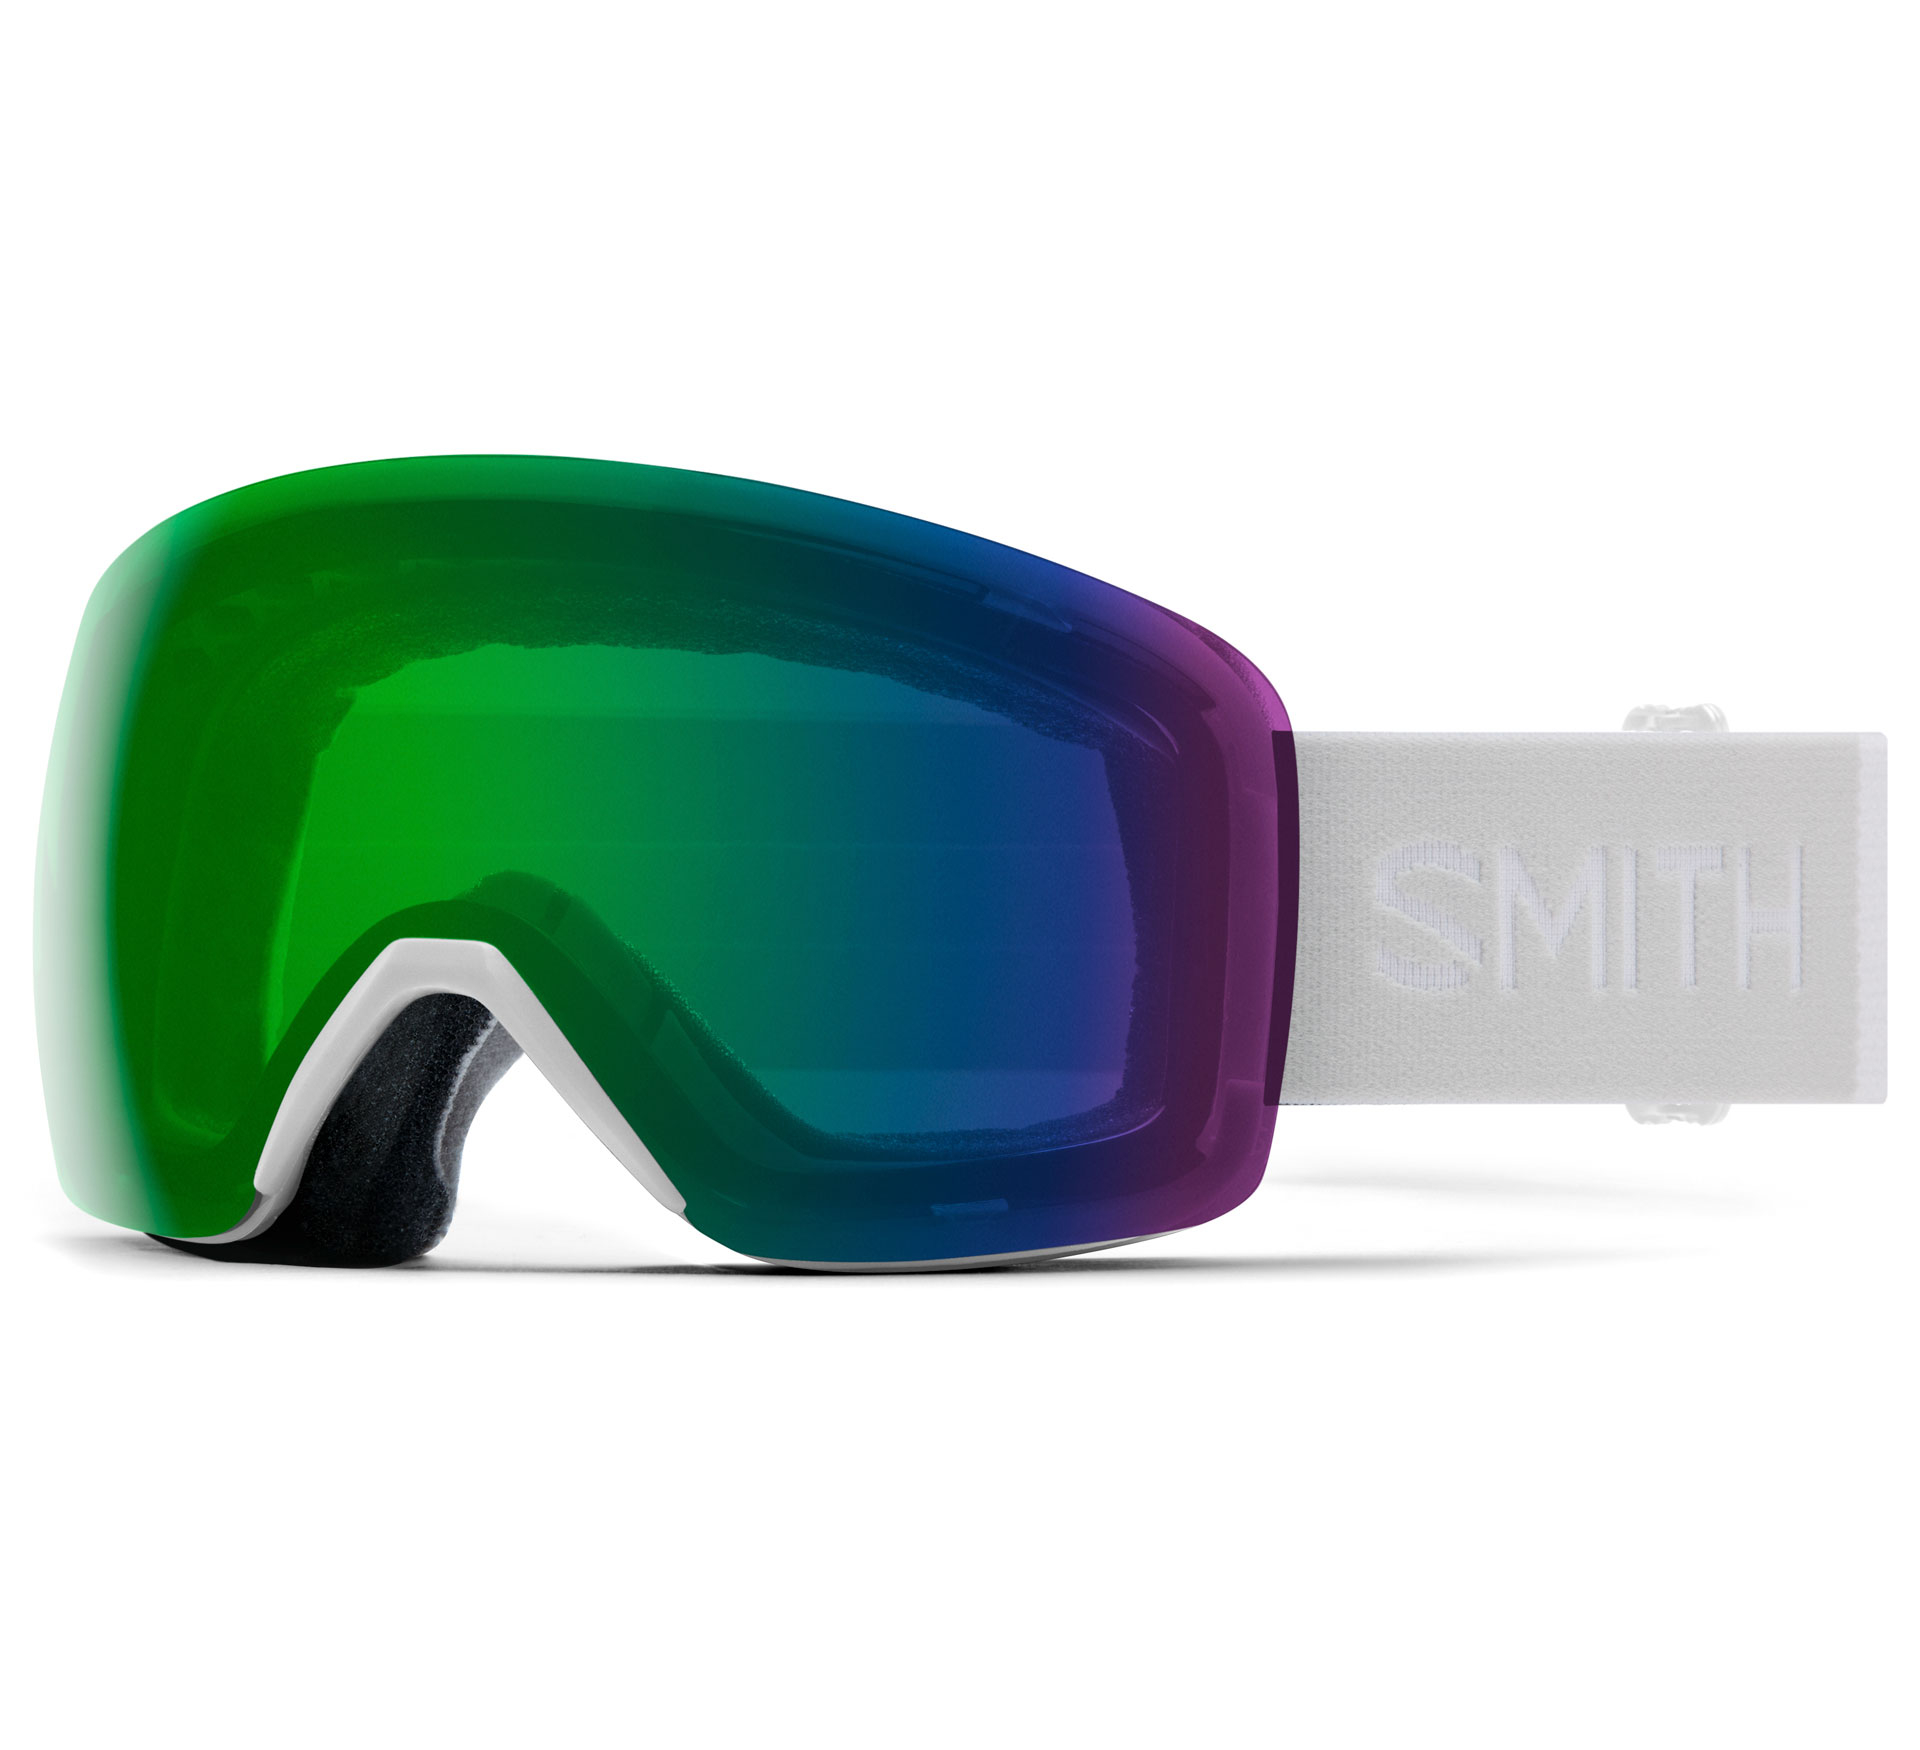 Masque de ski Smith Skyline Adulte